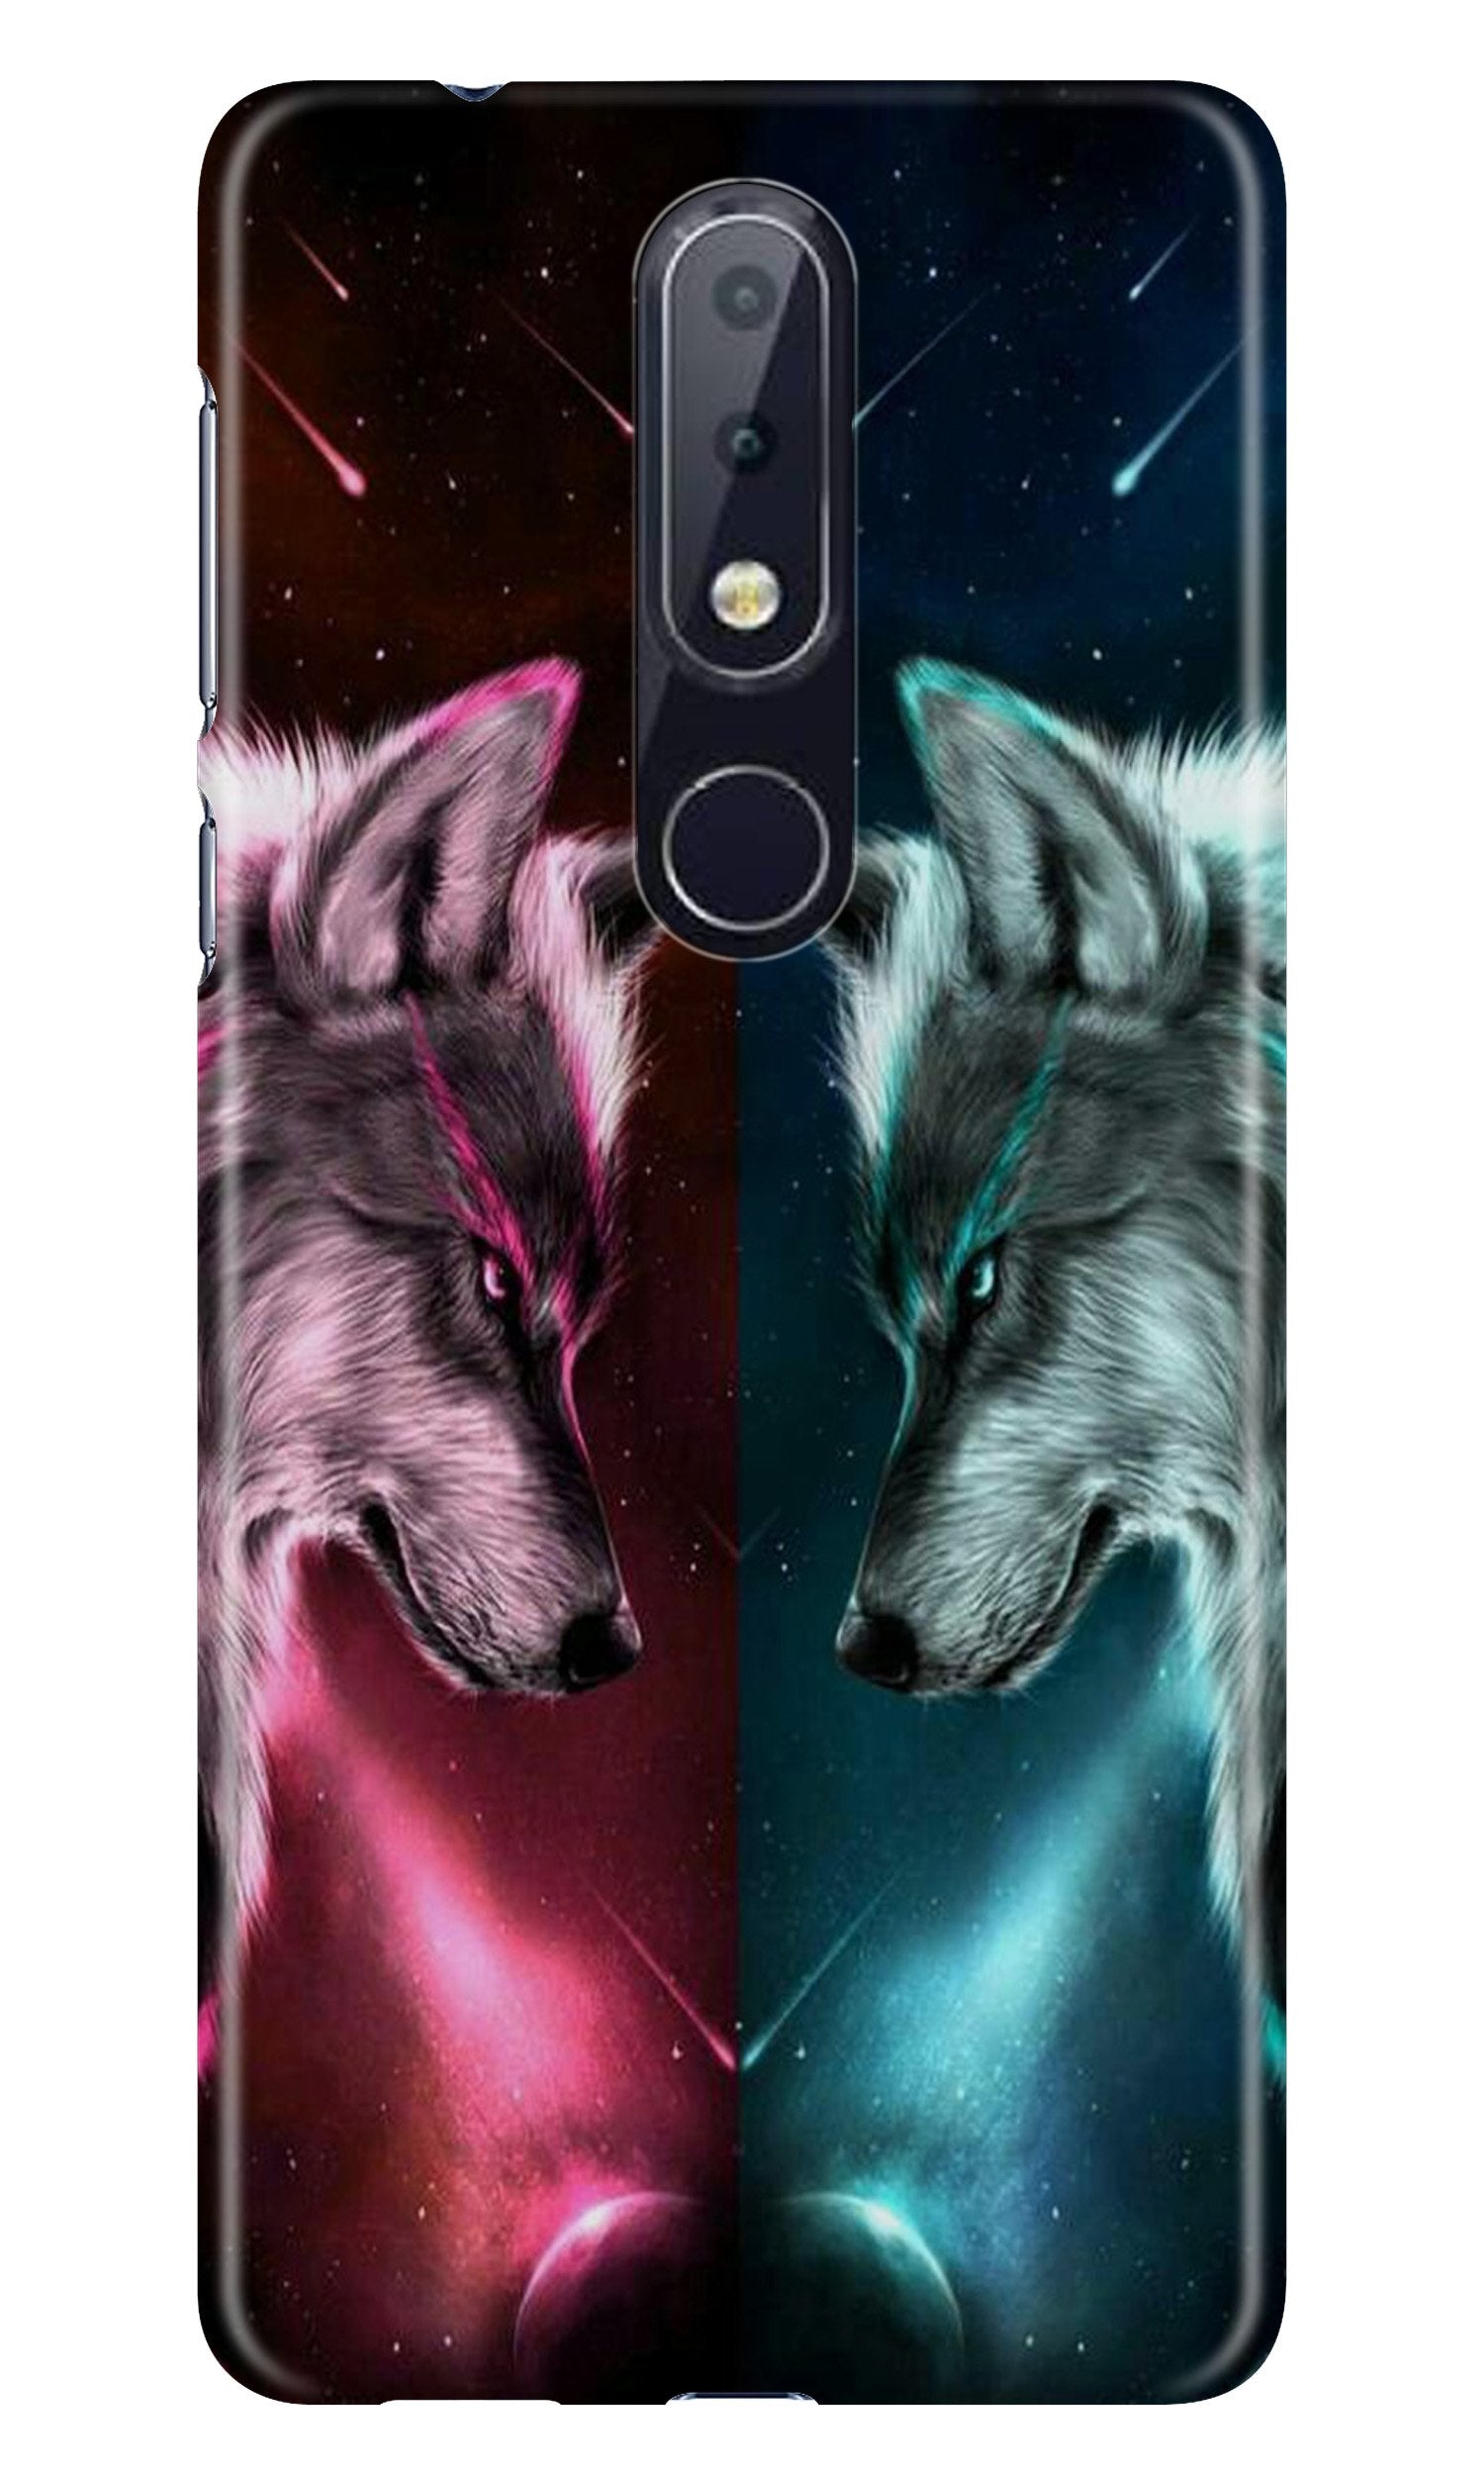 Wolf fight Case for Nokia 7.1 (Design No. 221)